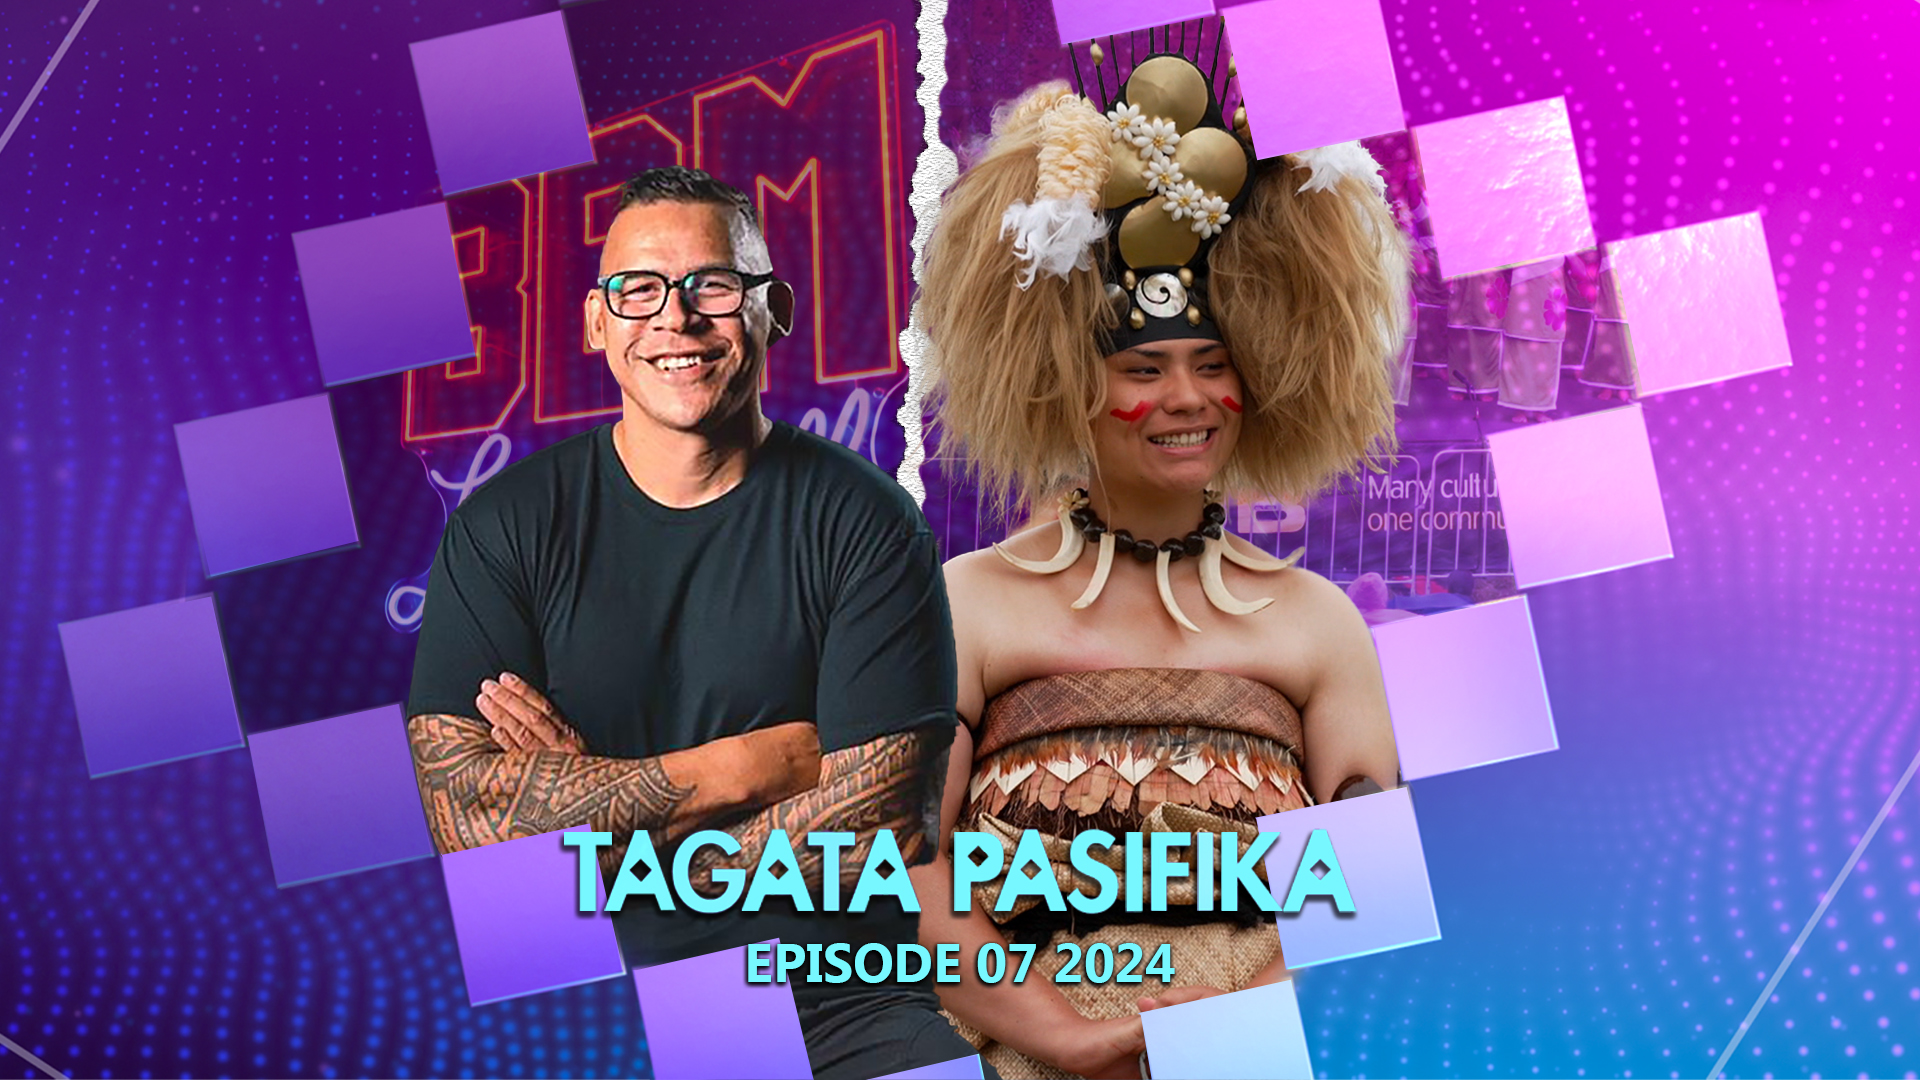 WATCH: Tagata Pasifika 2024 Episode 7